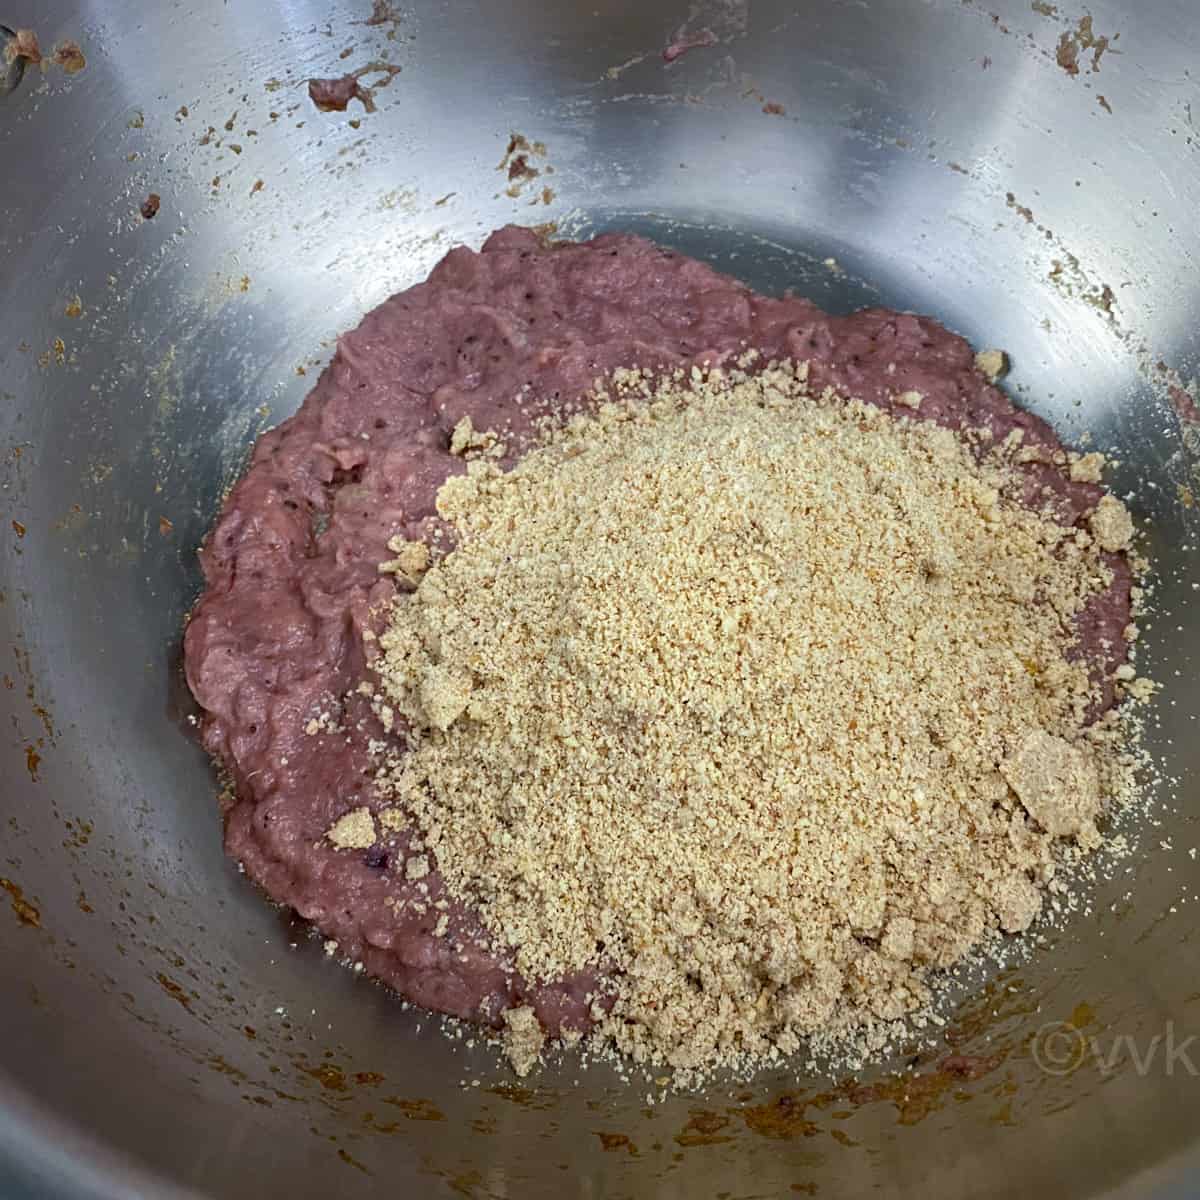 adding the nut mix to the sauteed onion masala